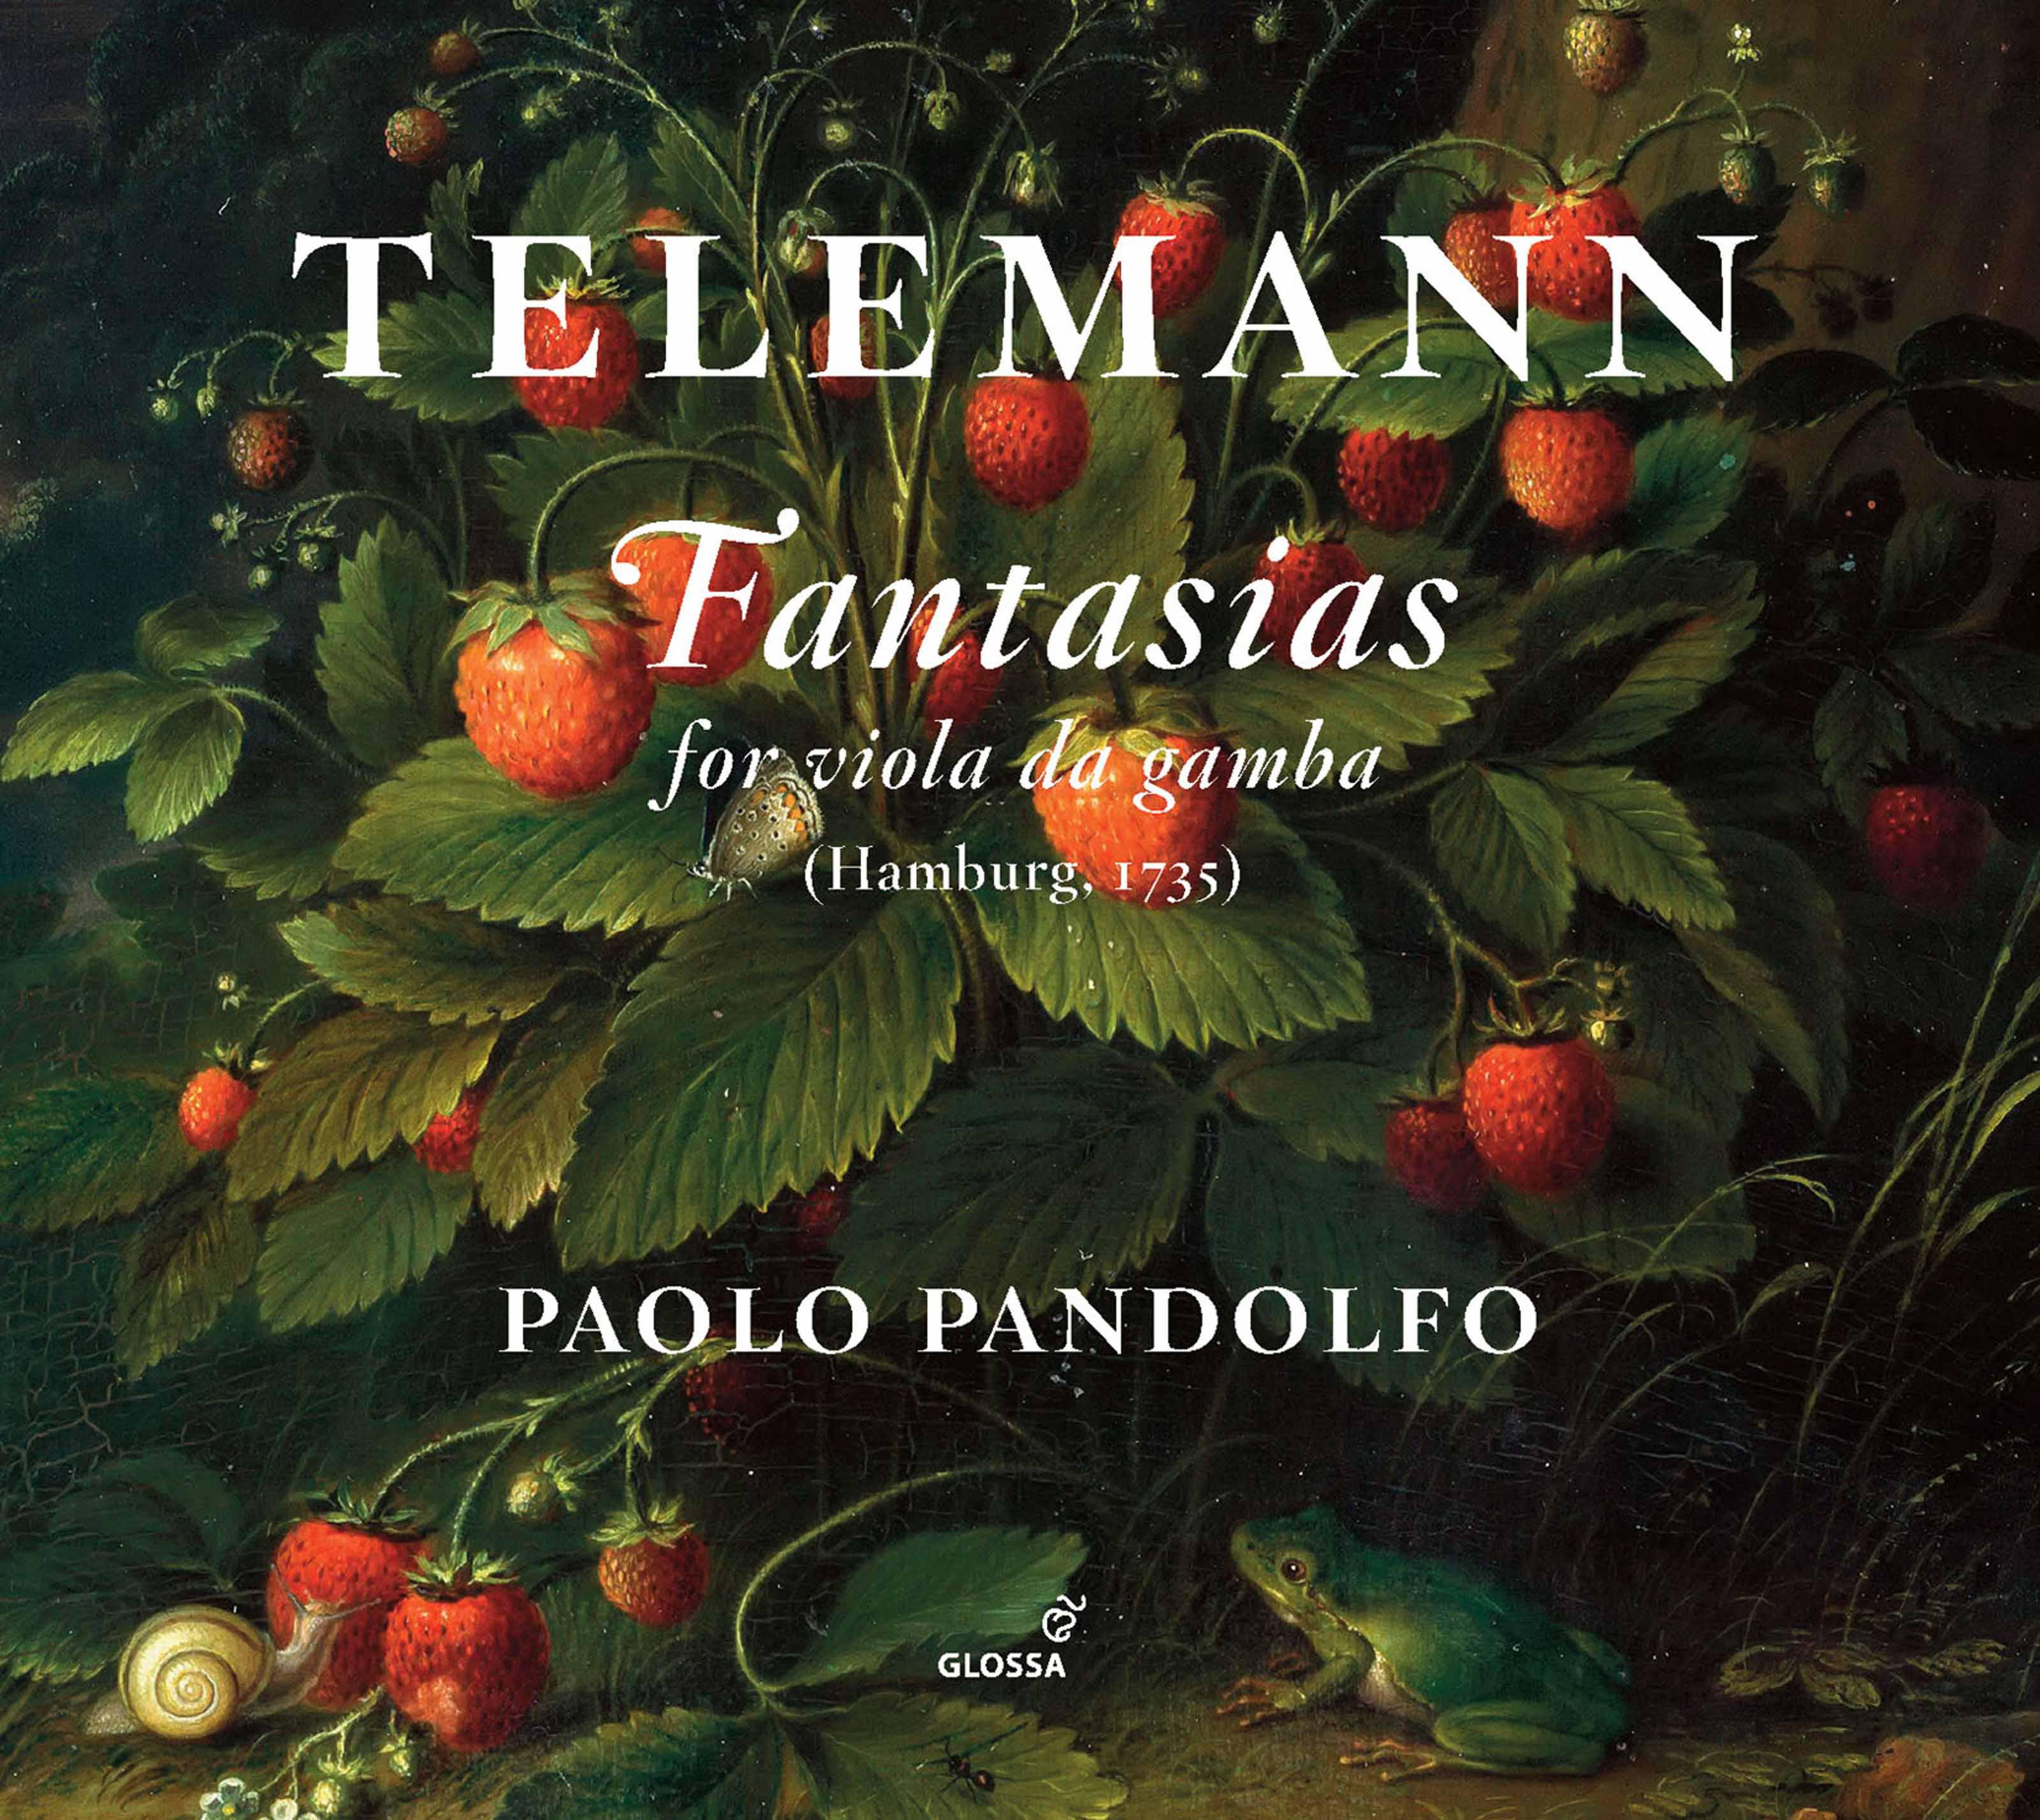 Paolo Pandolfo - Fantasia in C Major, TWV 40:34: II. Grave